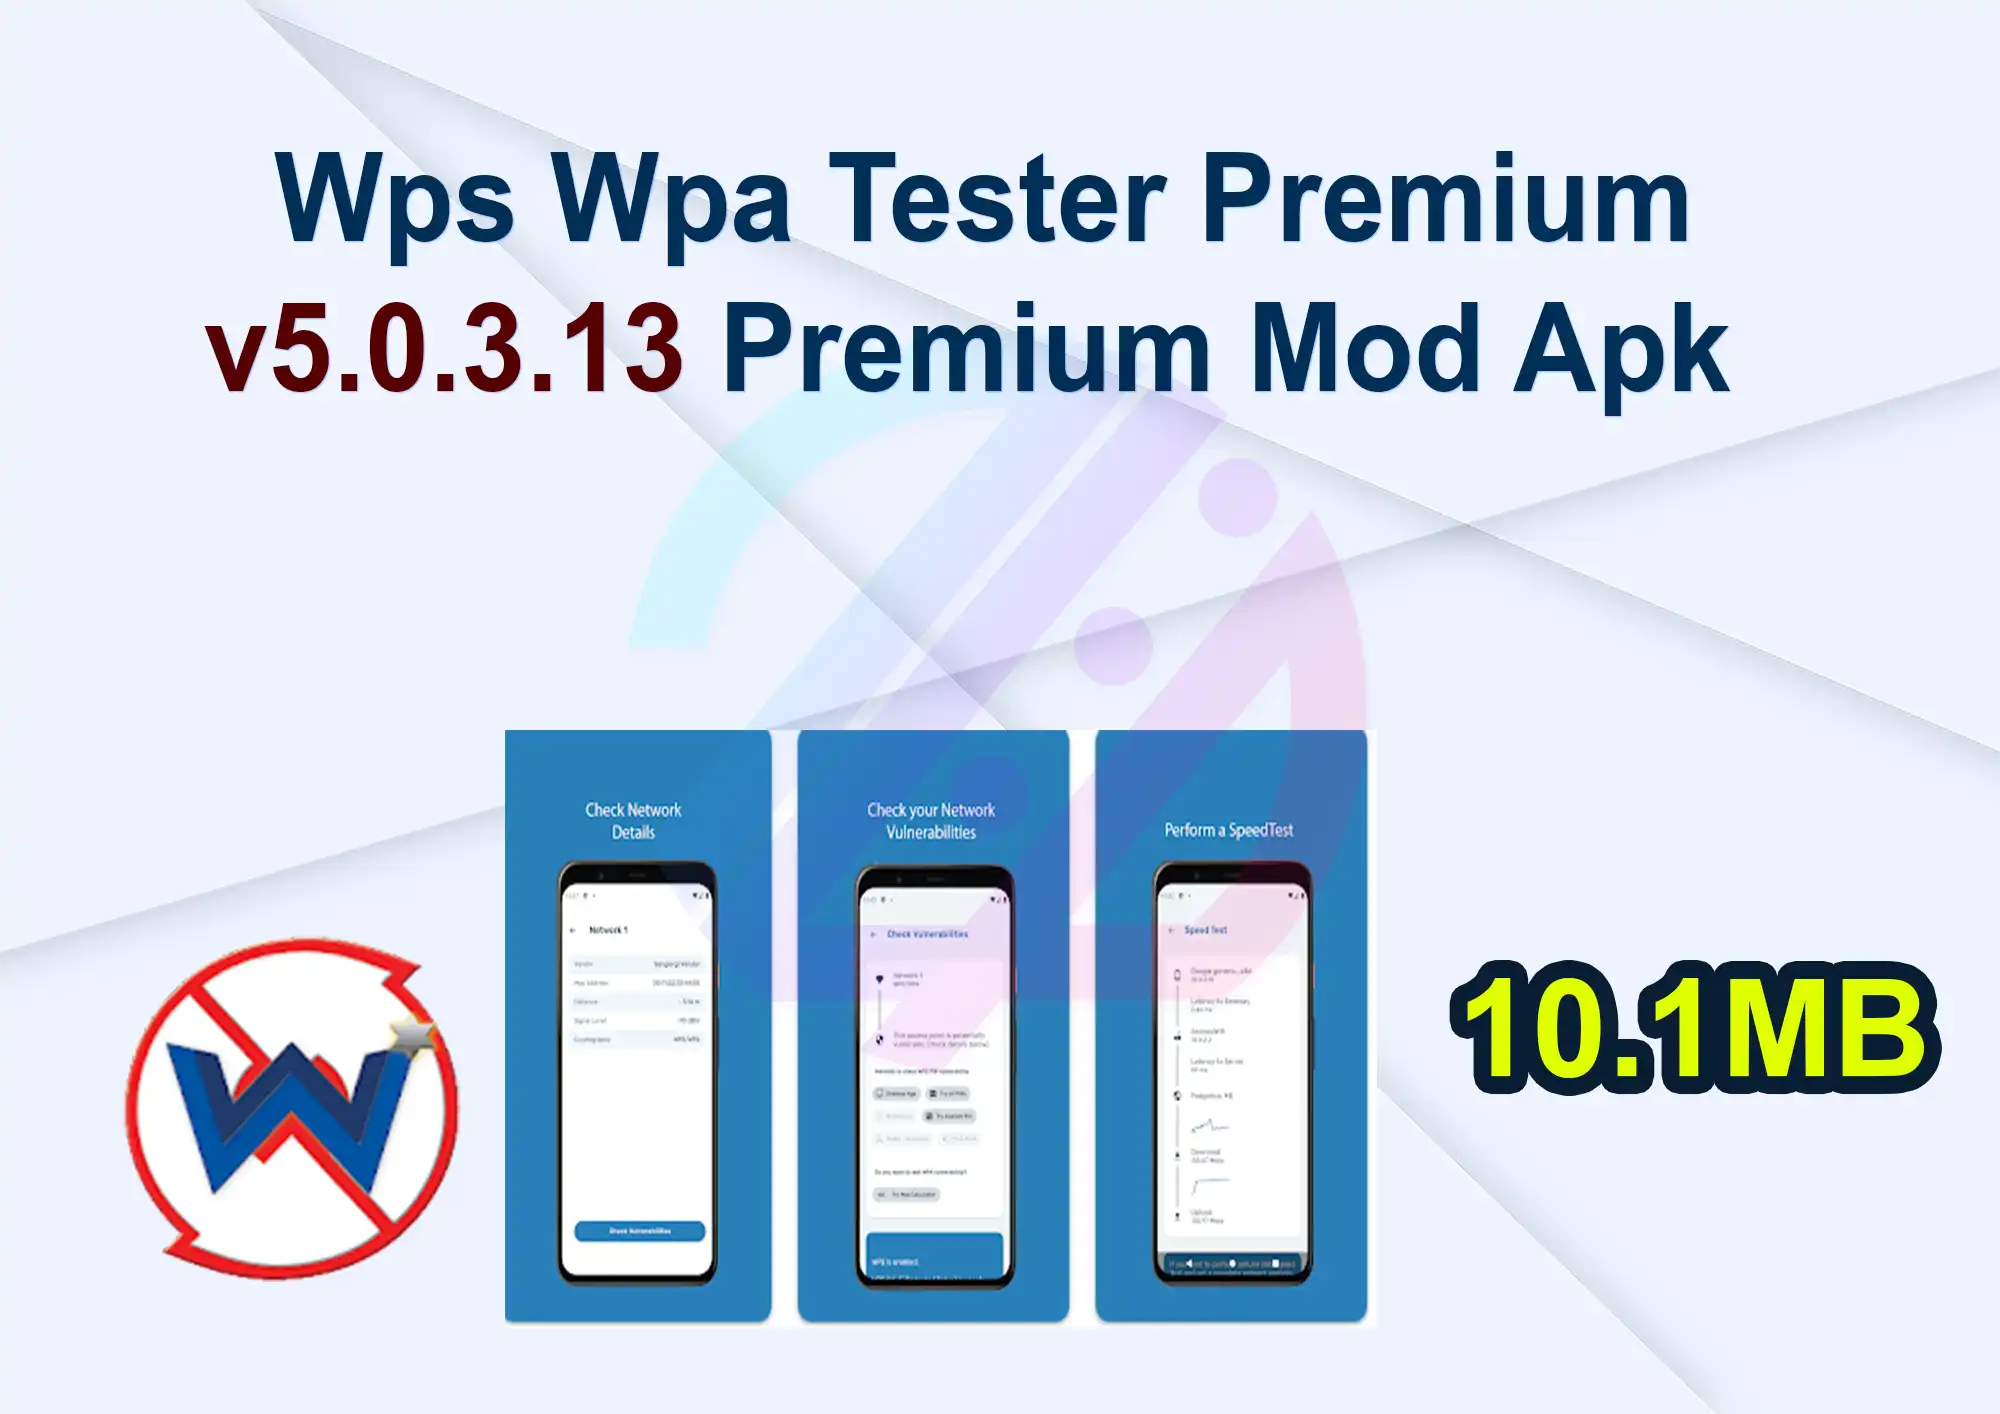 Wps Wpa Tester Premium v5.0.3.13 Premium Mod Apk